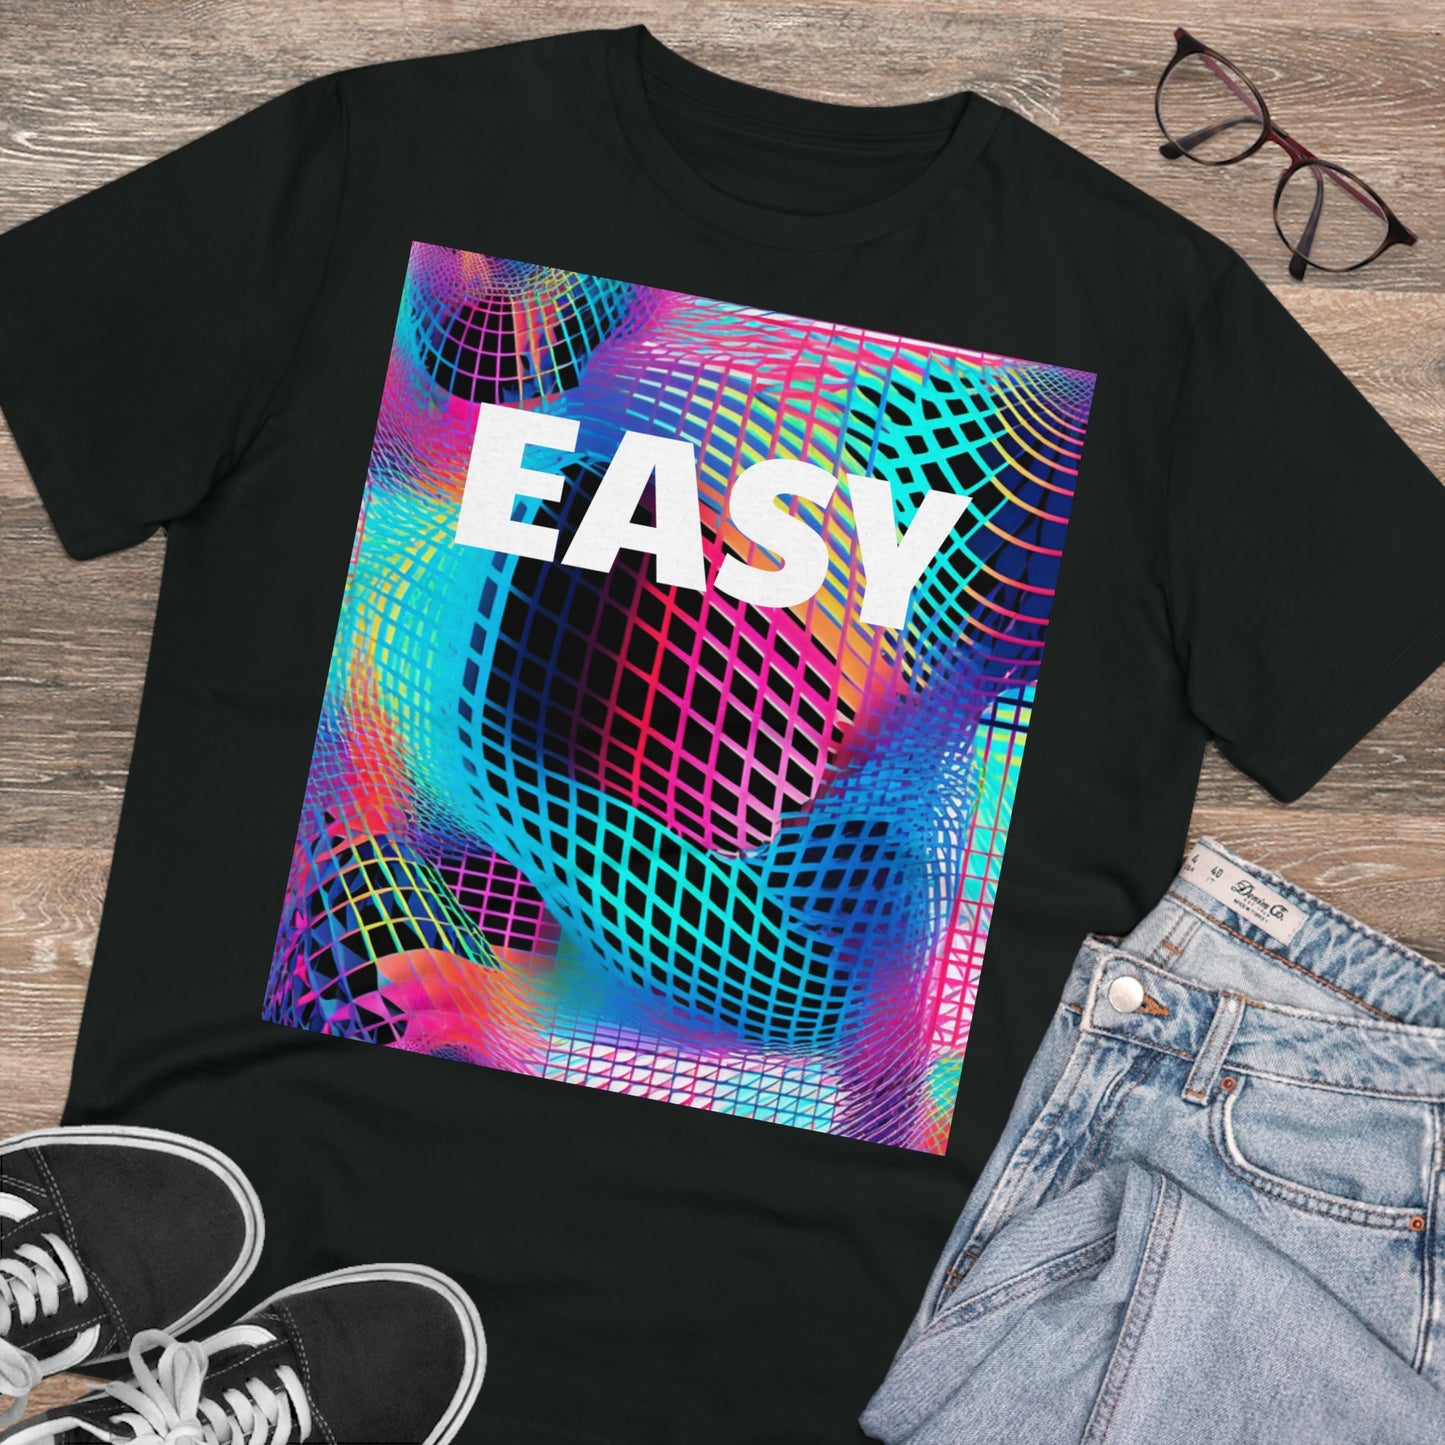 EASY - Organic T-shirt Unisex